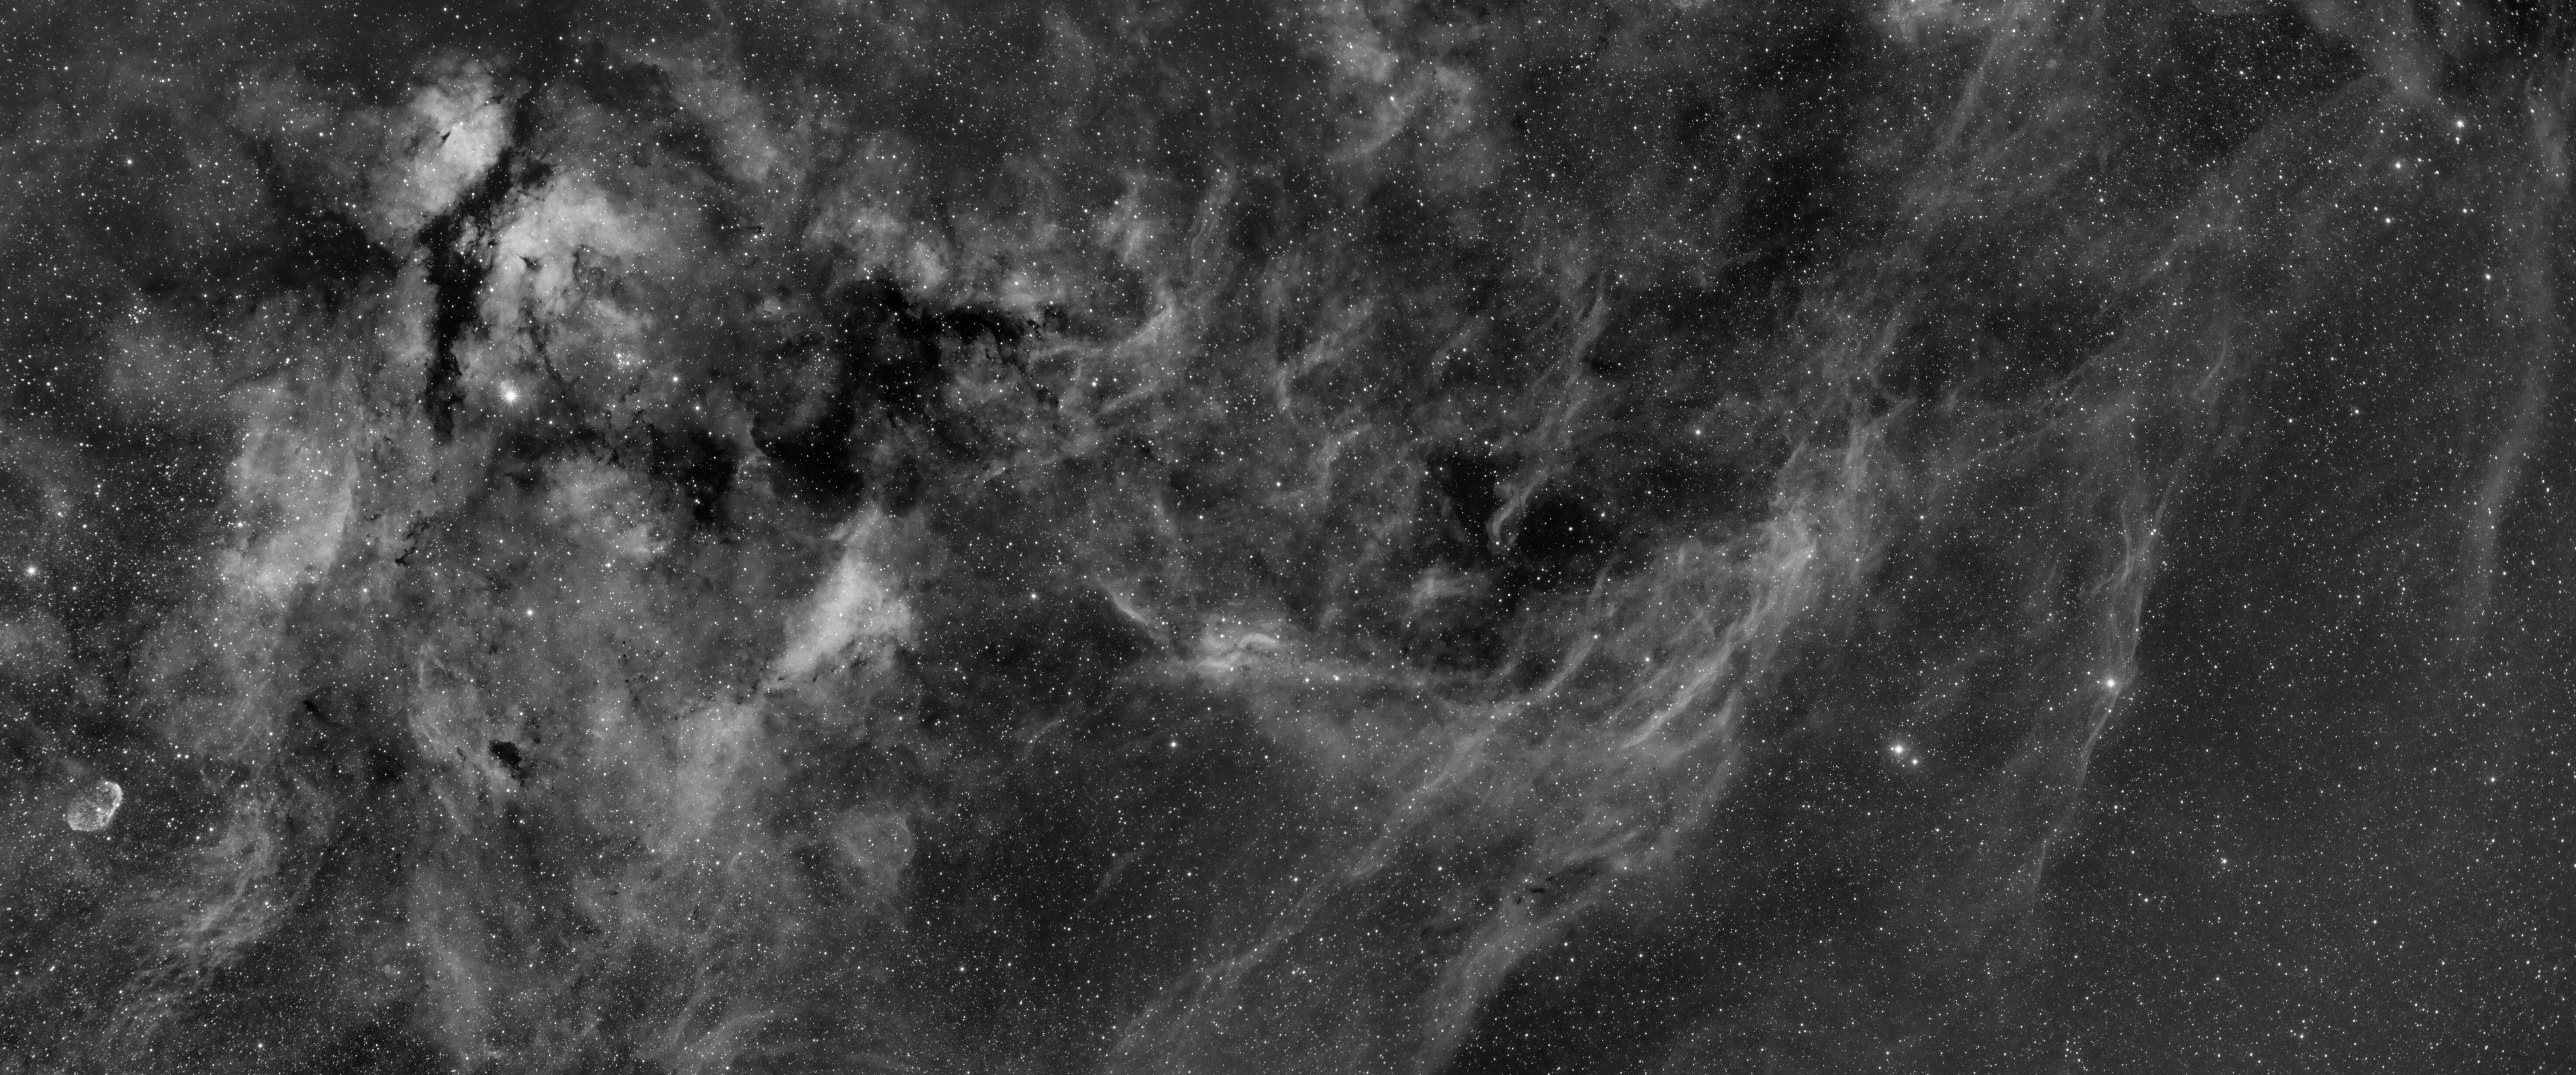 Sadr Area Nebula Mosaic in H-alpha